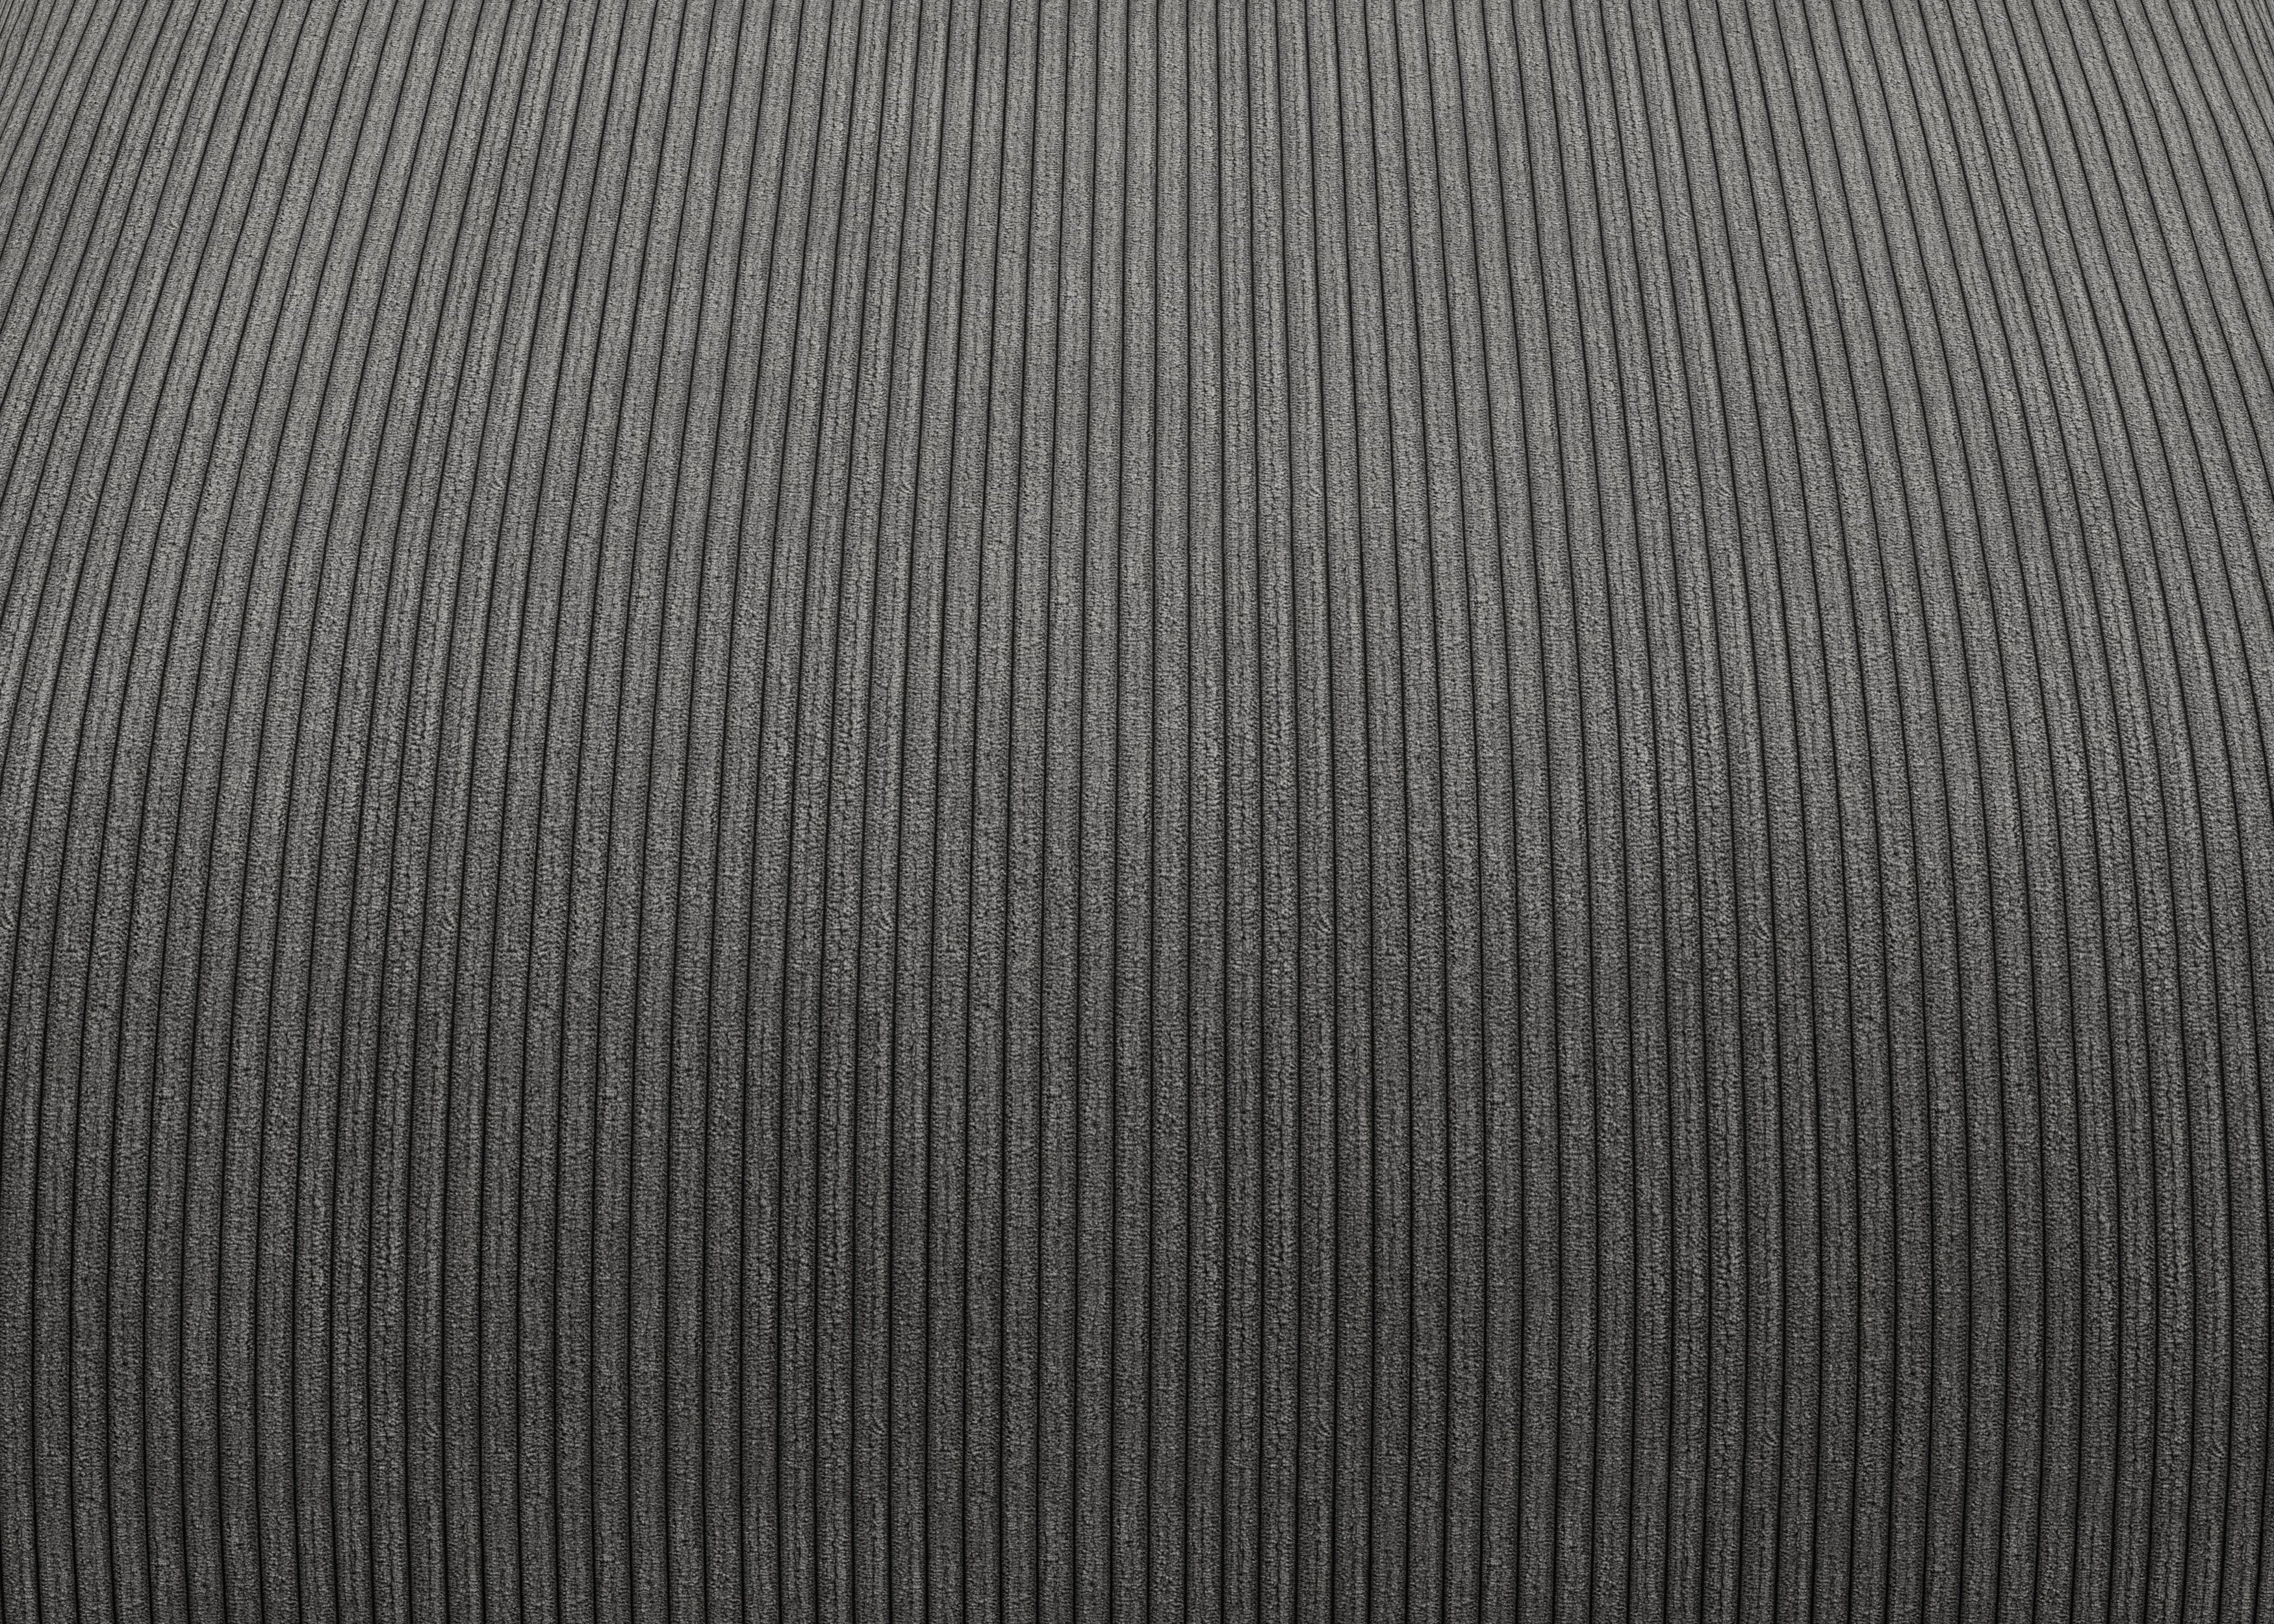 vetsak®-Two Seat Lounge Sofa L Cord Velours dark grey